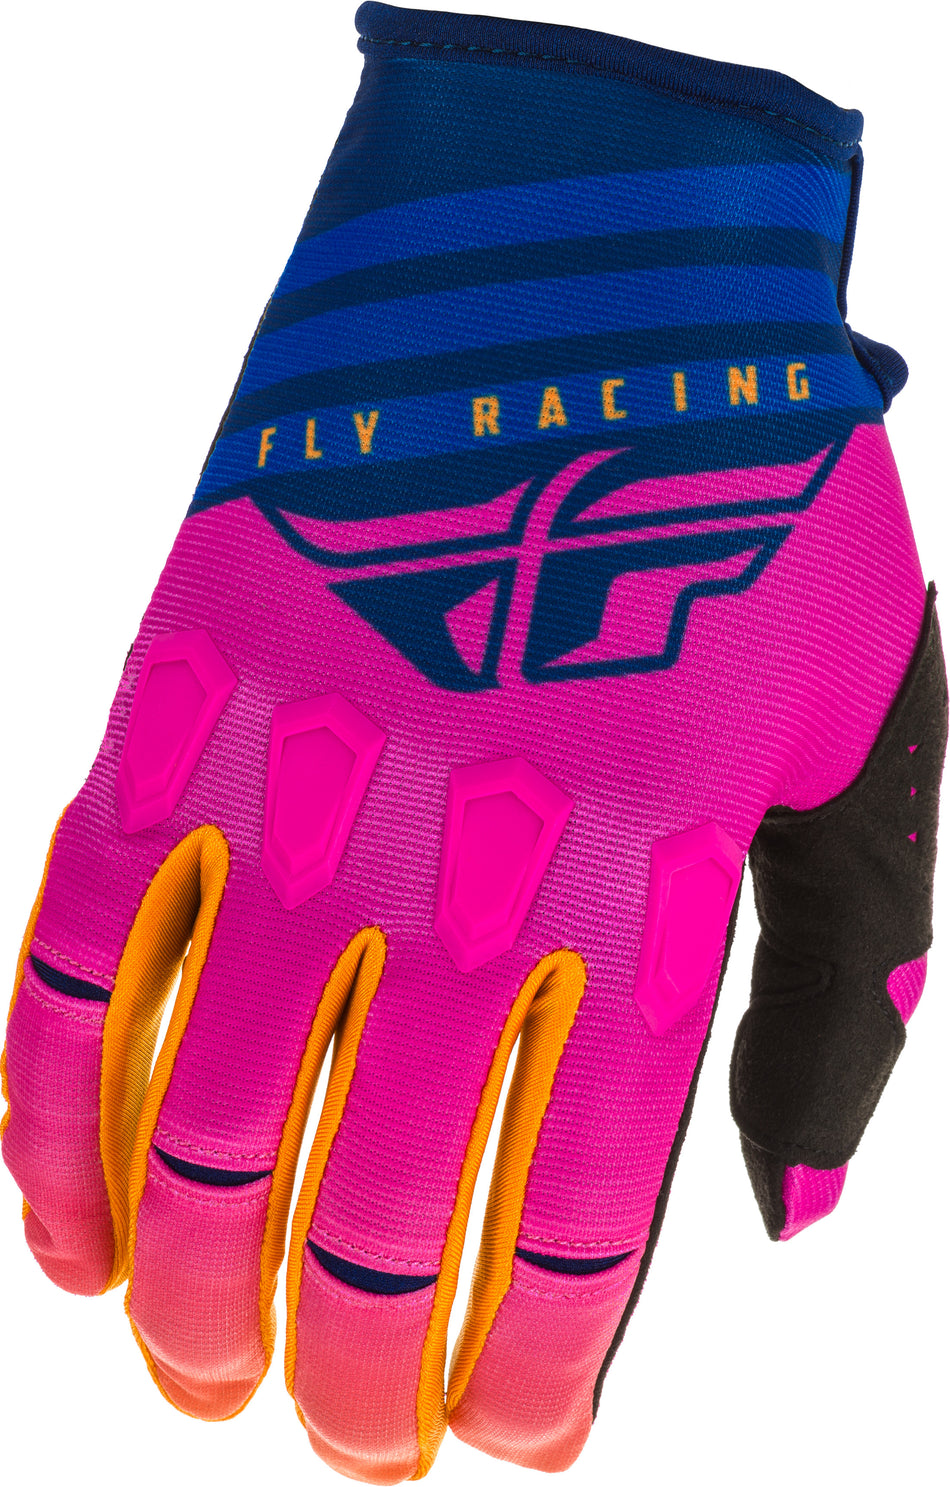 FLY RACING Kinetic K220 Gloves Midnight/Blue/Orange Sz 08 373-51908